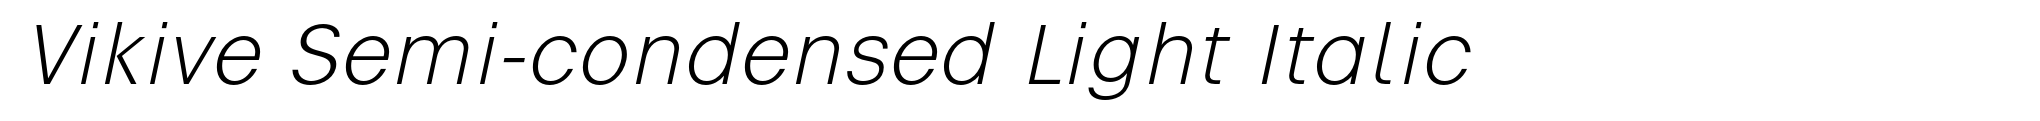 Vikive Semi-condensed Light Italic image